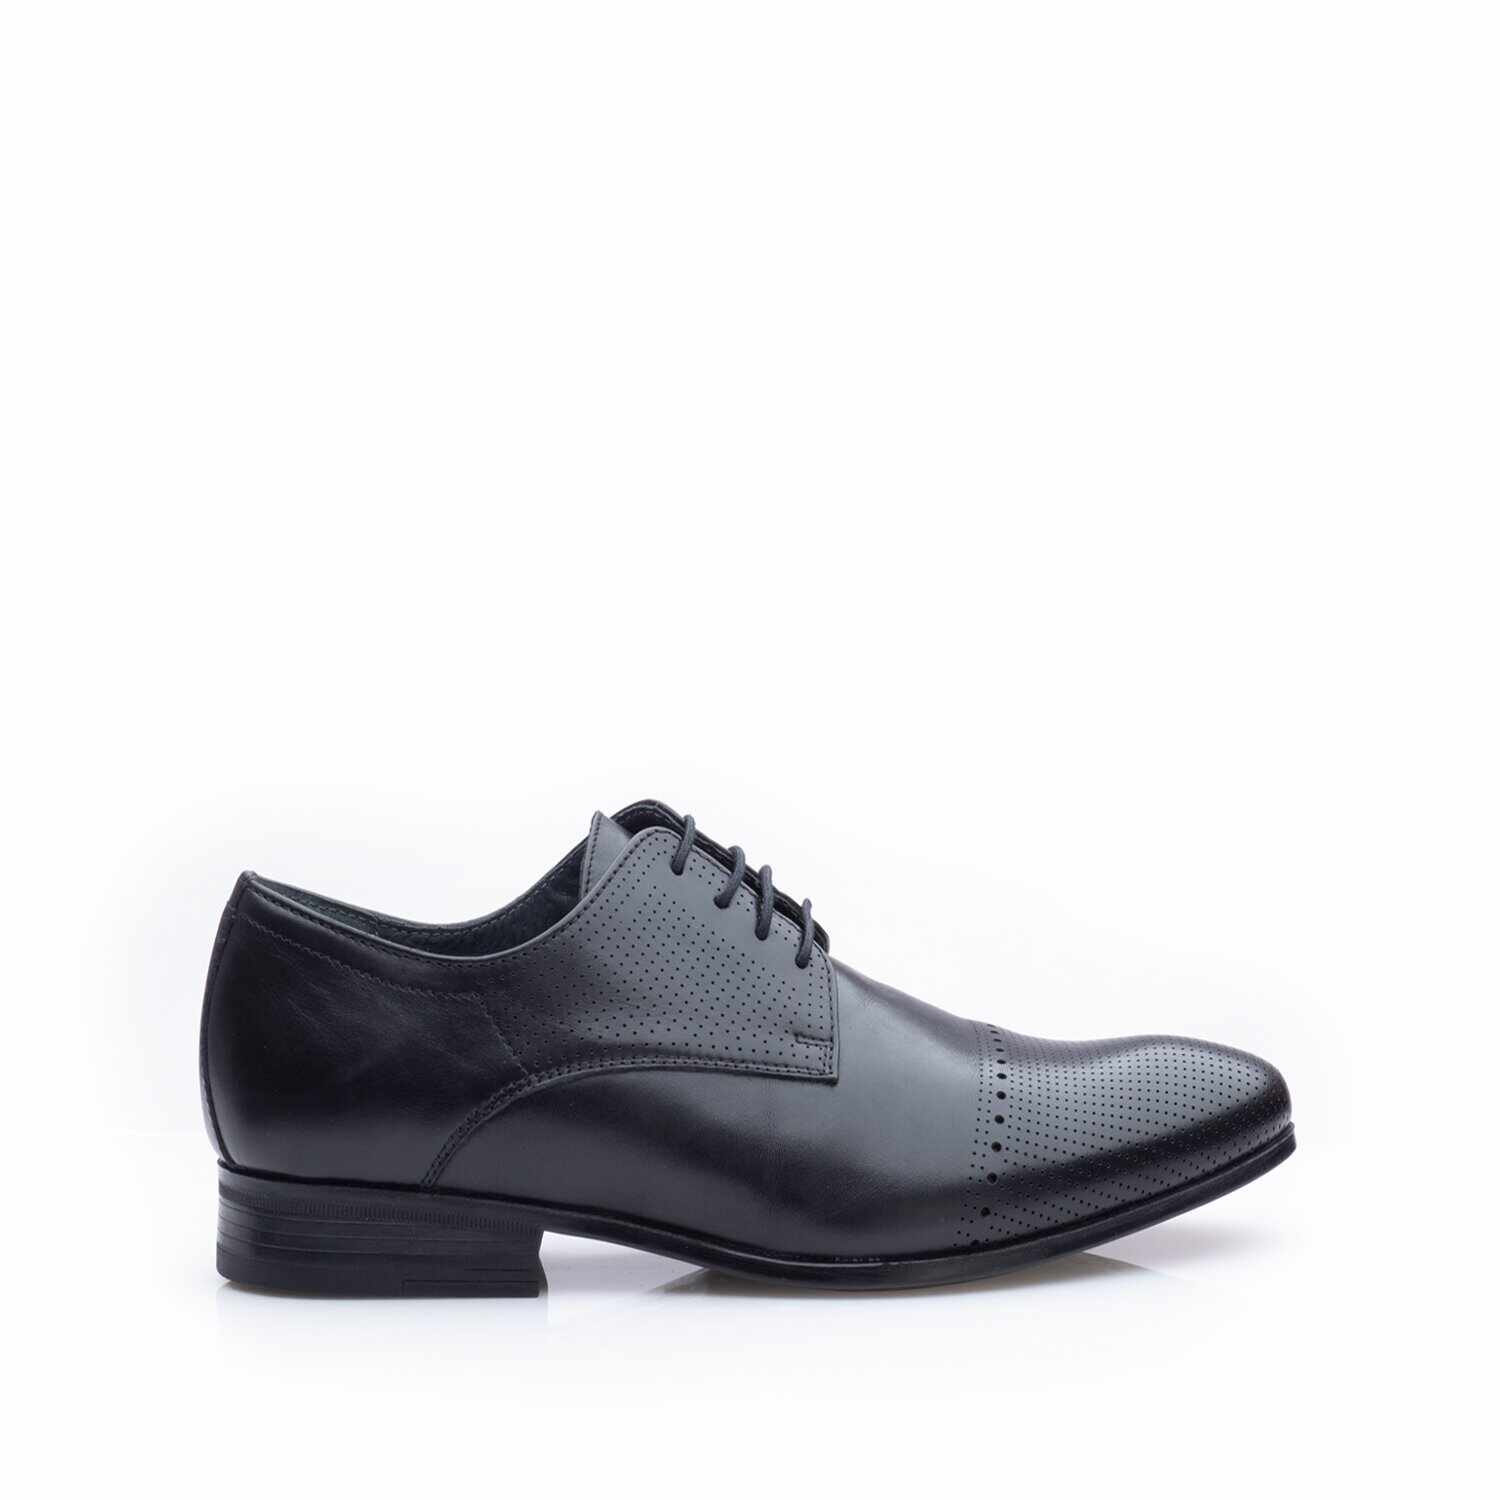 Pantofi eleganti barbati din piele naturala,Leofex - 821 negru